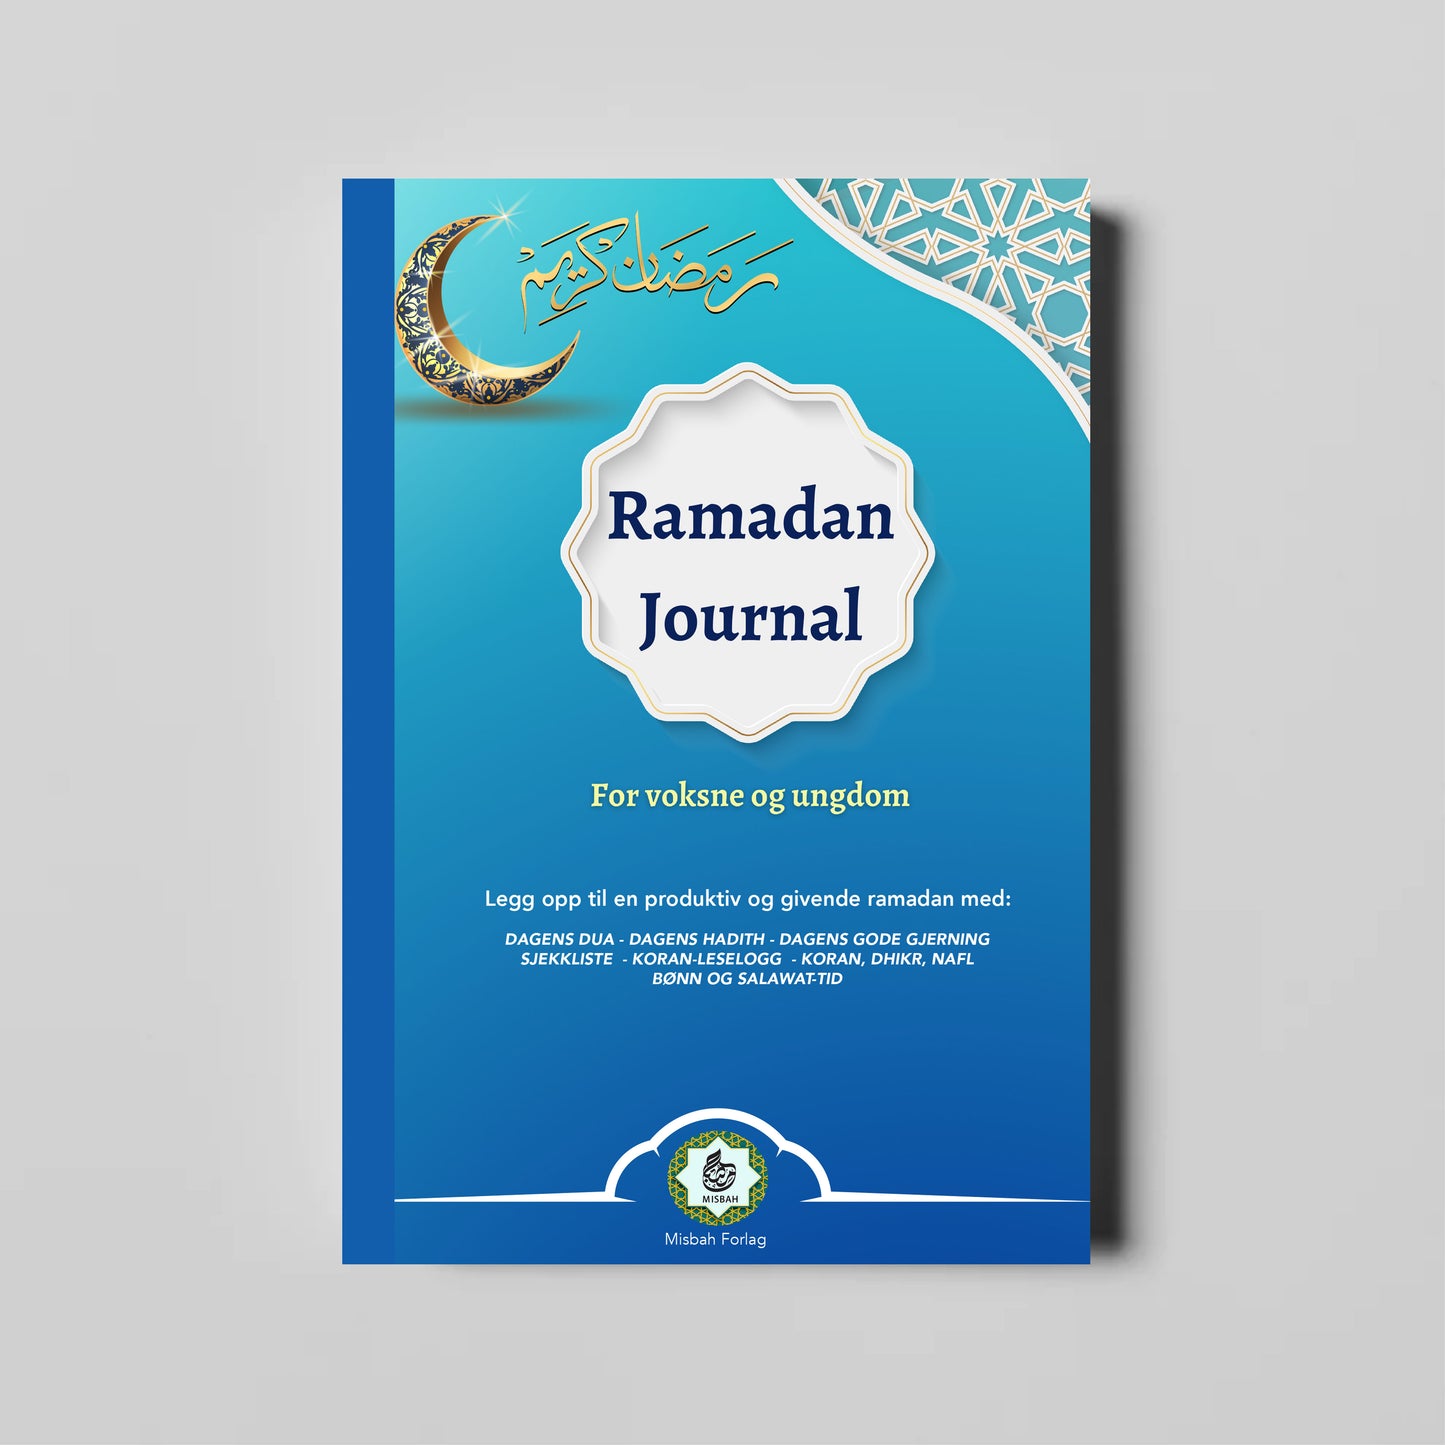 Ramadan Journal for voksne og unge